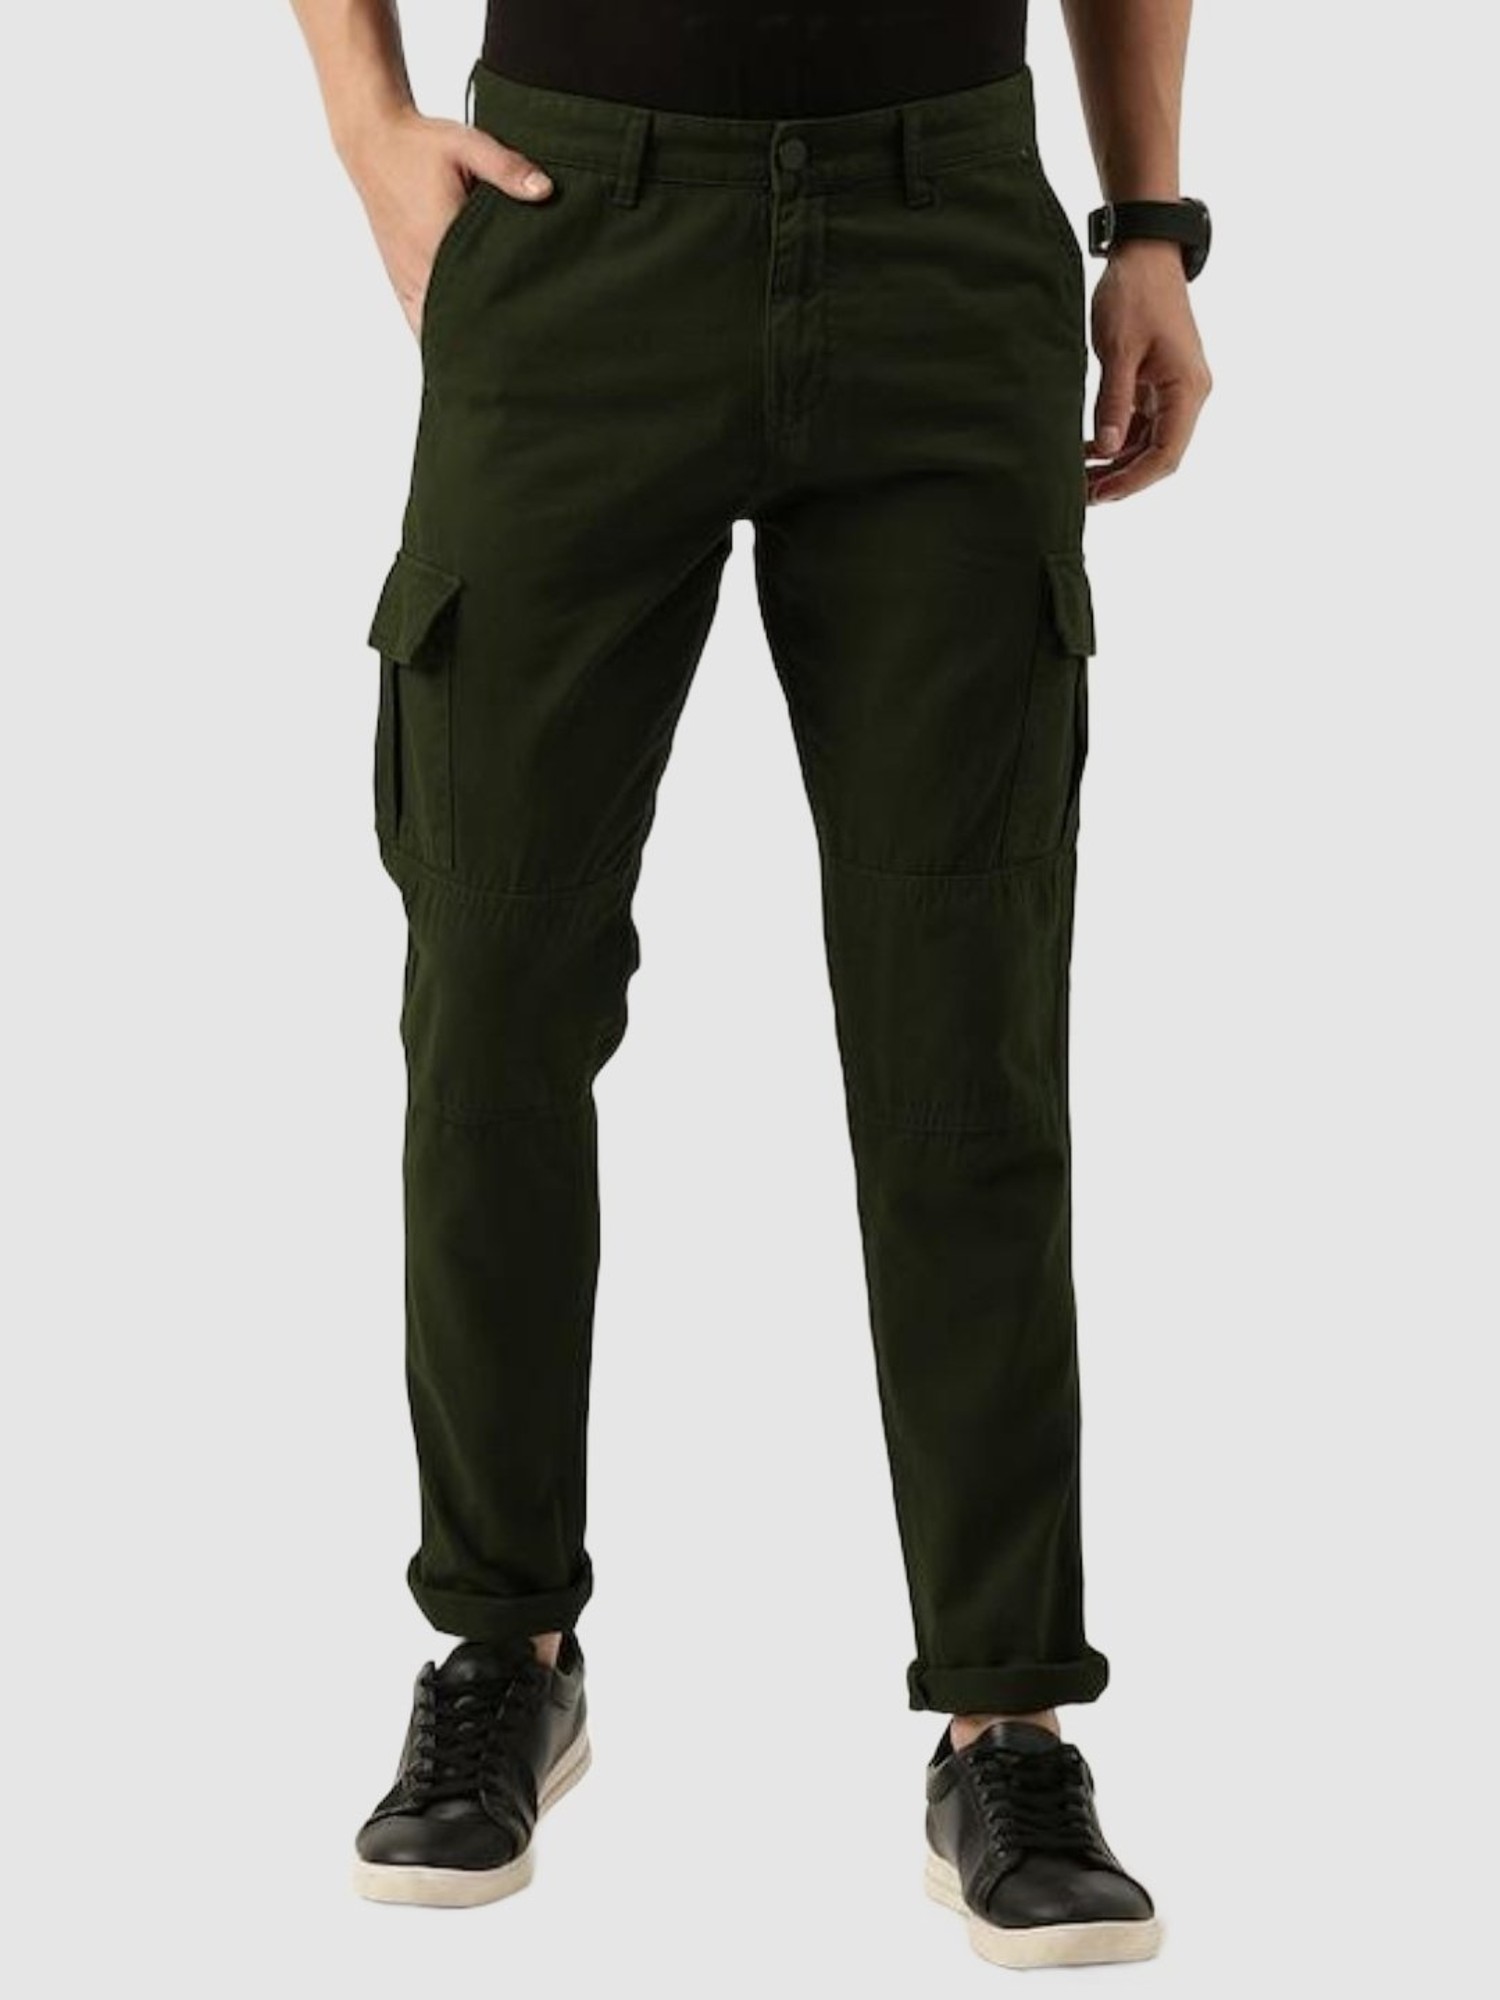 Buy Mens Green Cargo Trousers for Men Green Online at Bewakoof